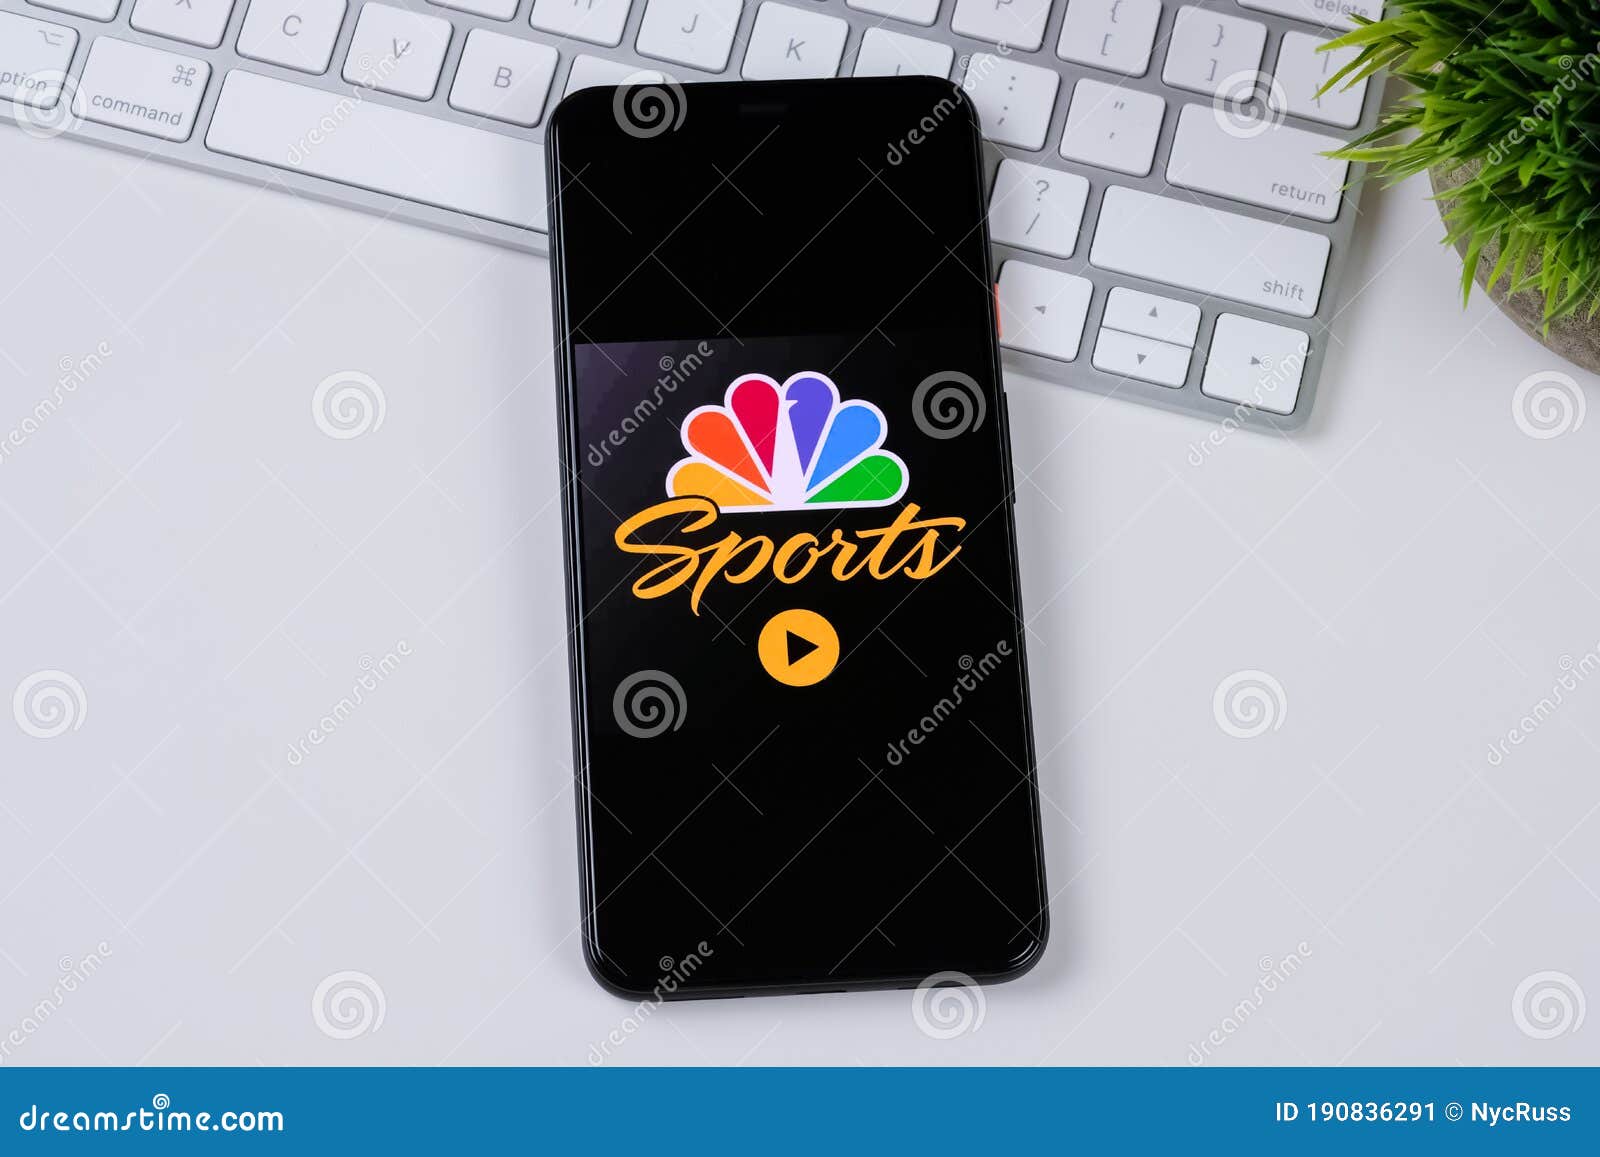 NBC Sports App Logo on a Smartphone Screen